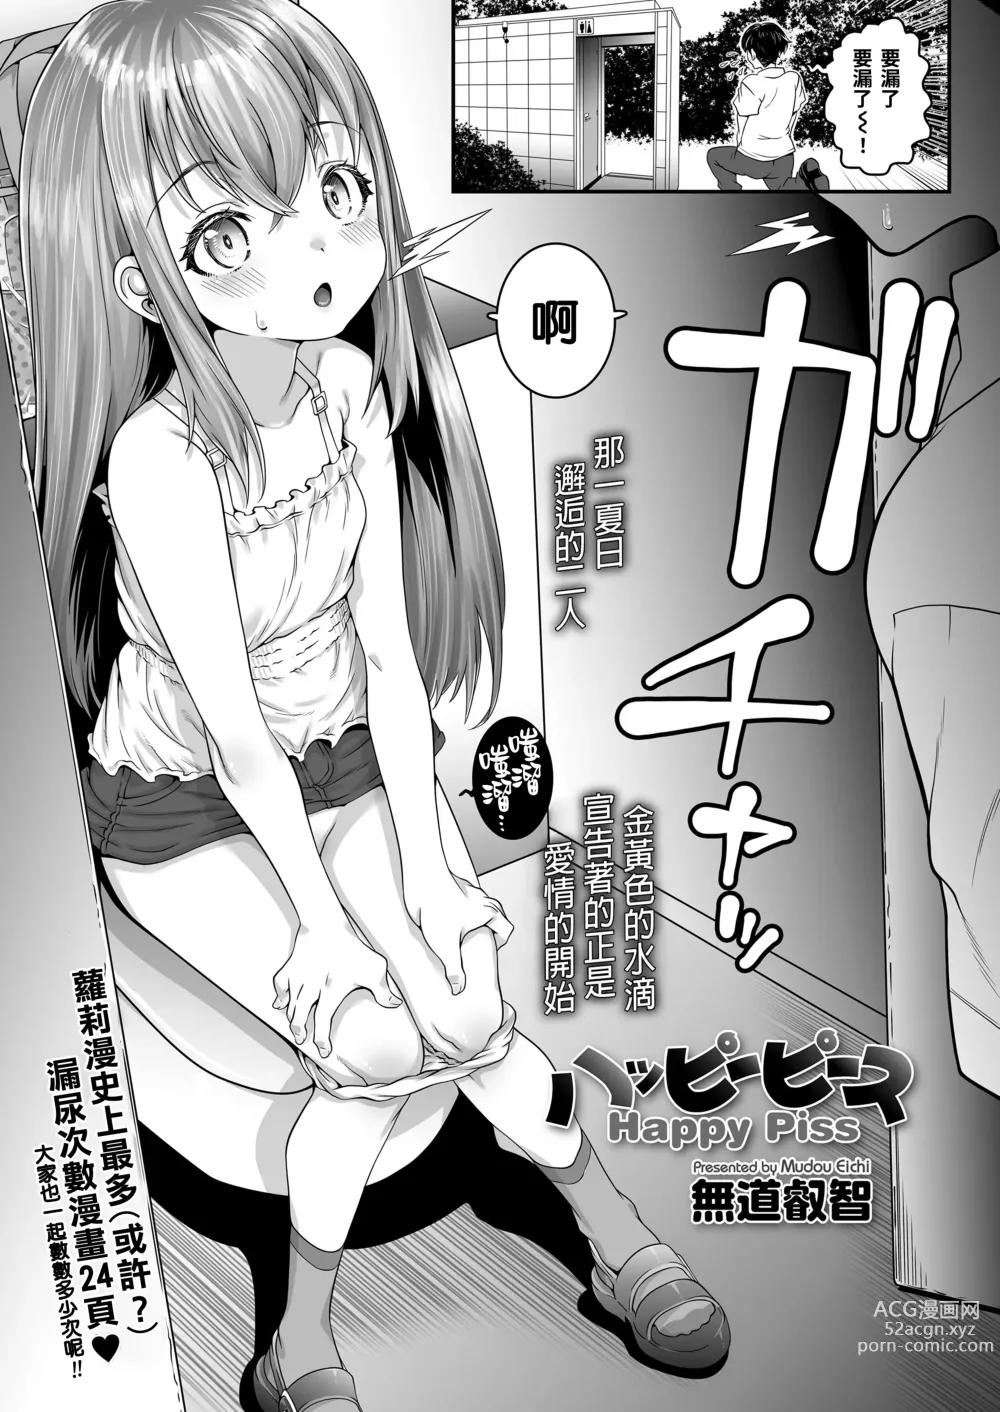 Page 2 of manga Happy Piss